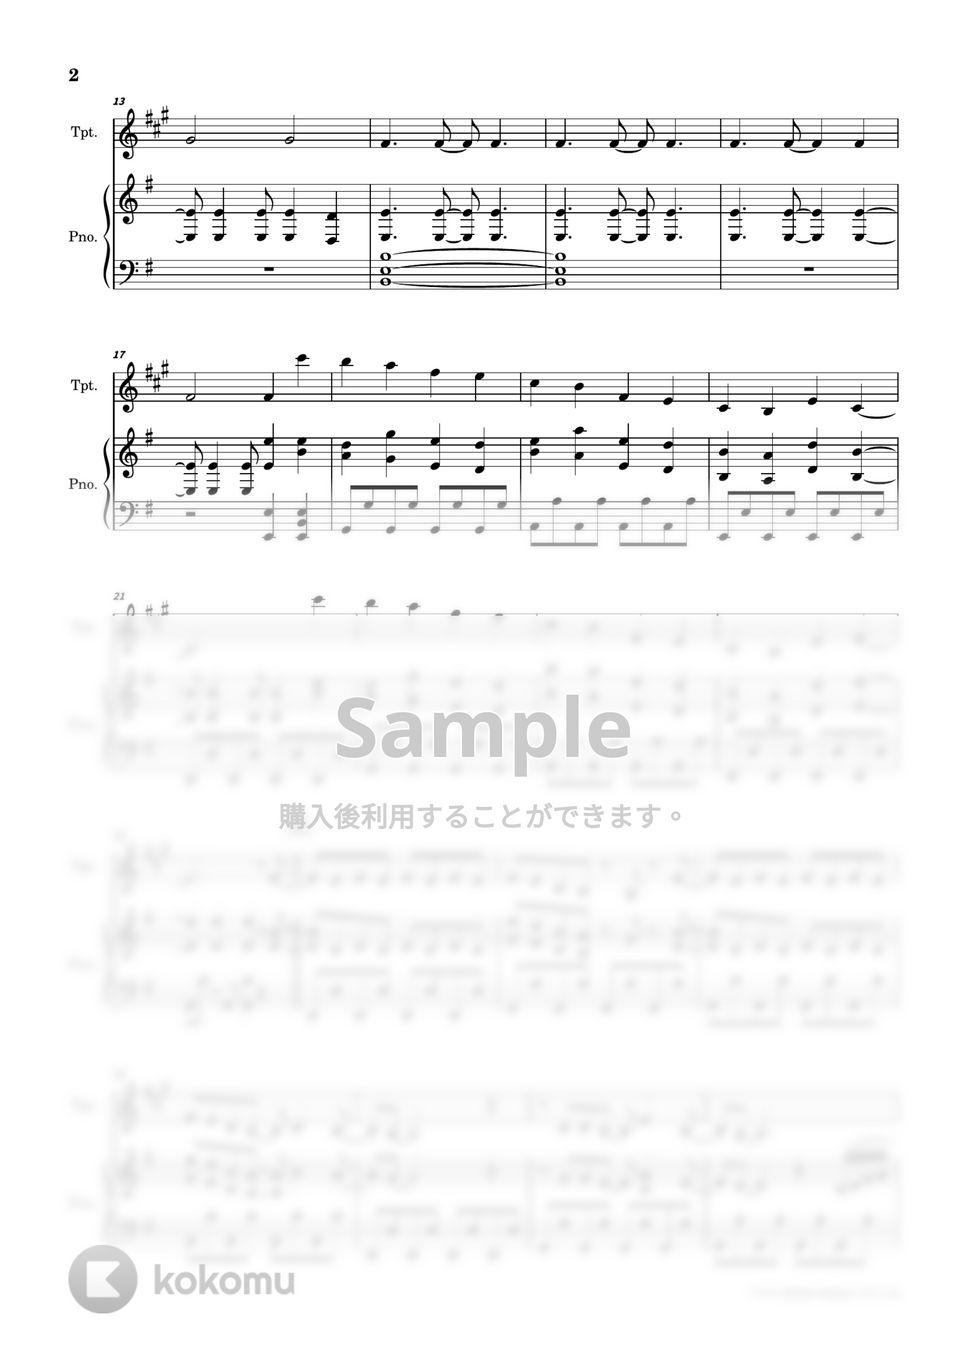 Ado - 新時代 [トランペット＆ピアノ] Ado (ONE PIECE FILM RED) by 管楽器の楽譜★ふるすこあ